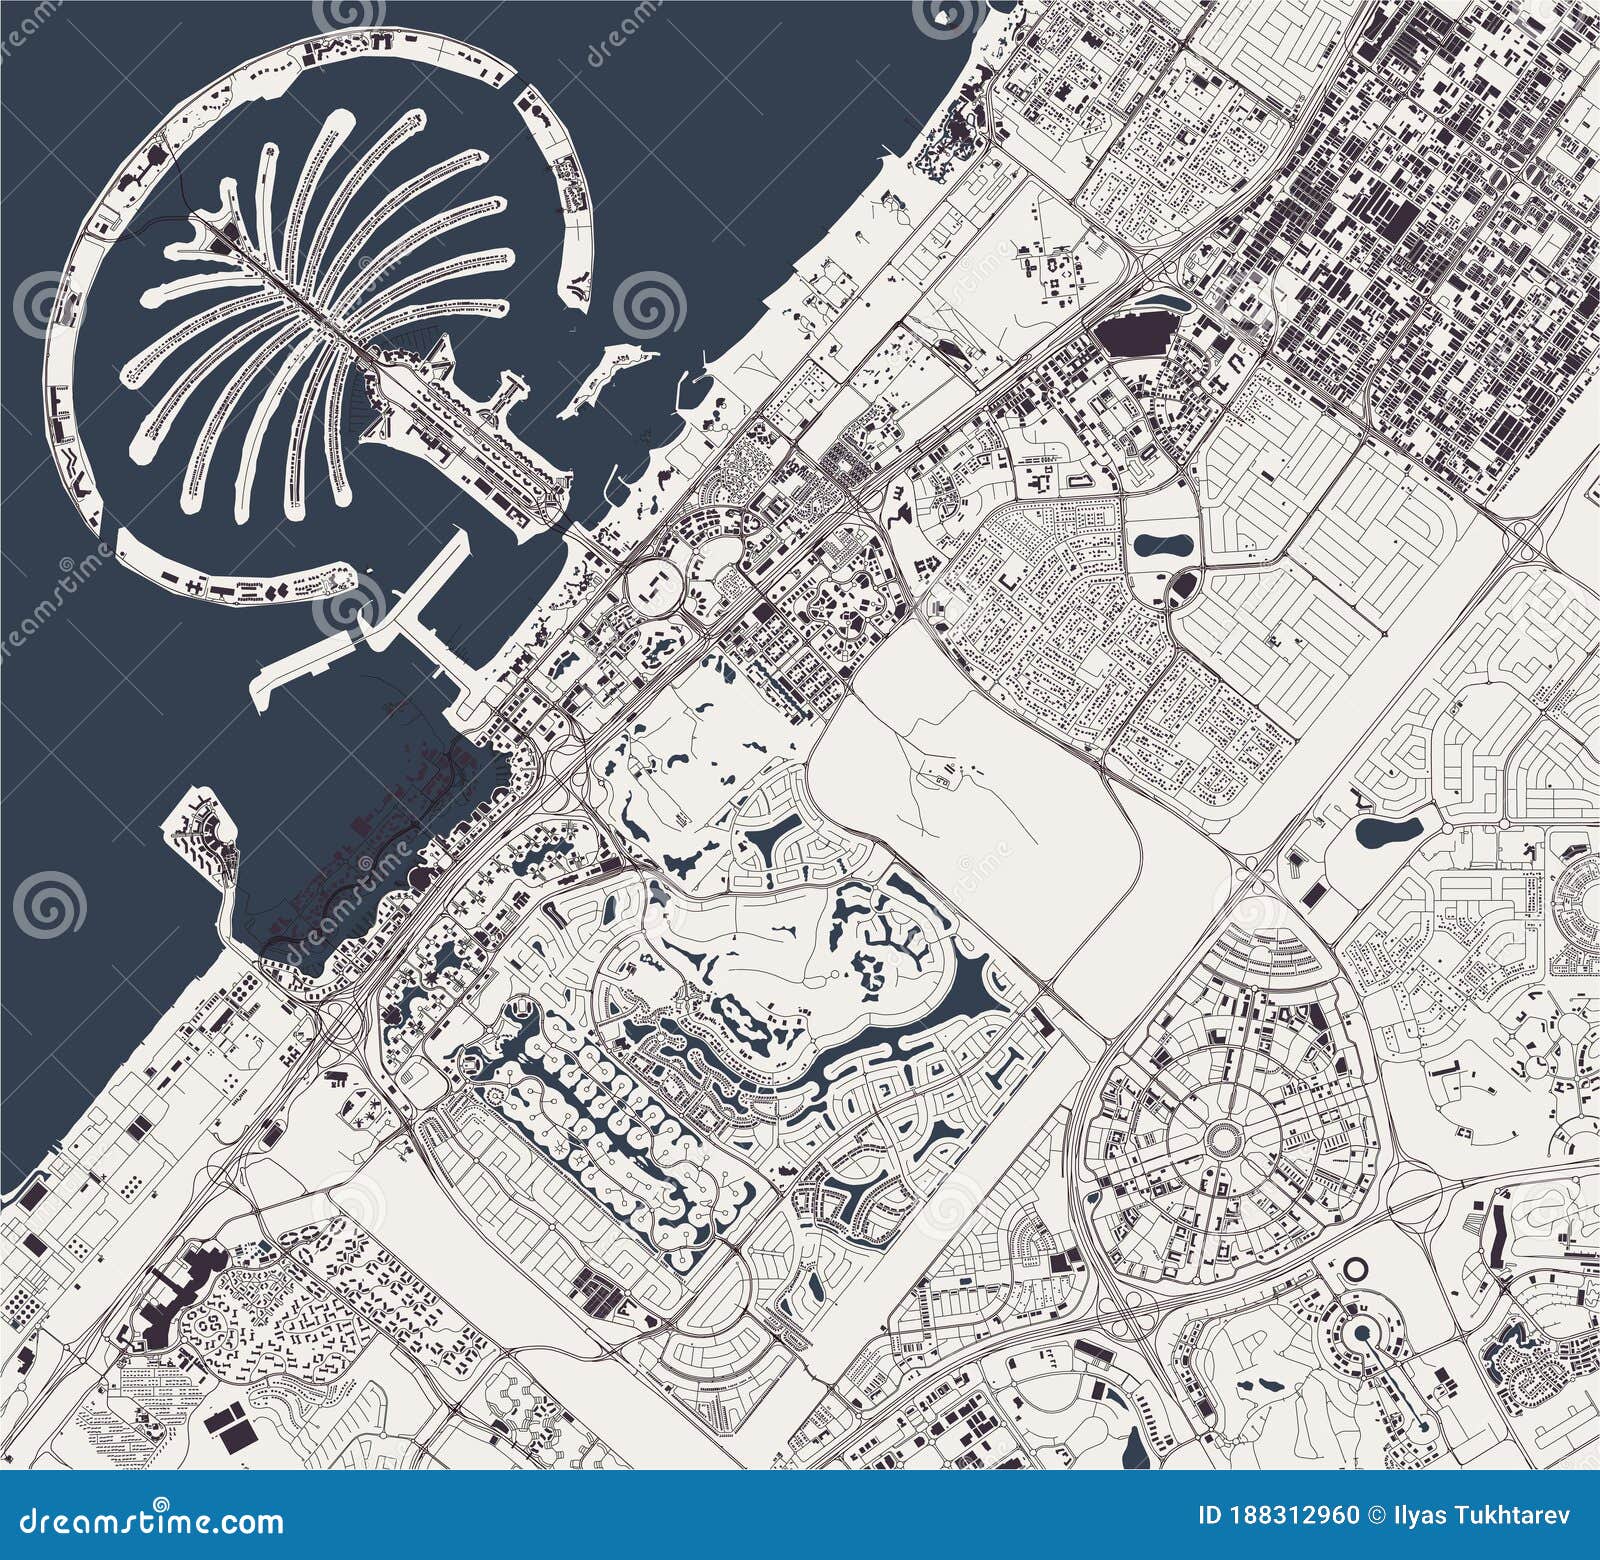 Map City Dubai United Arab Emirates Uae Vector Sharjah Ajman Metropolitan Area 188312960 